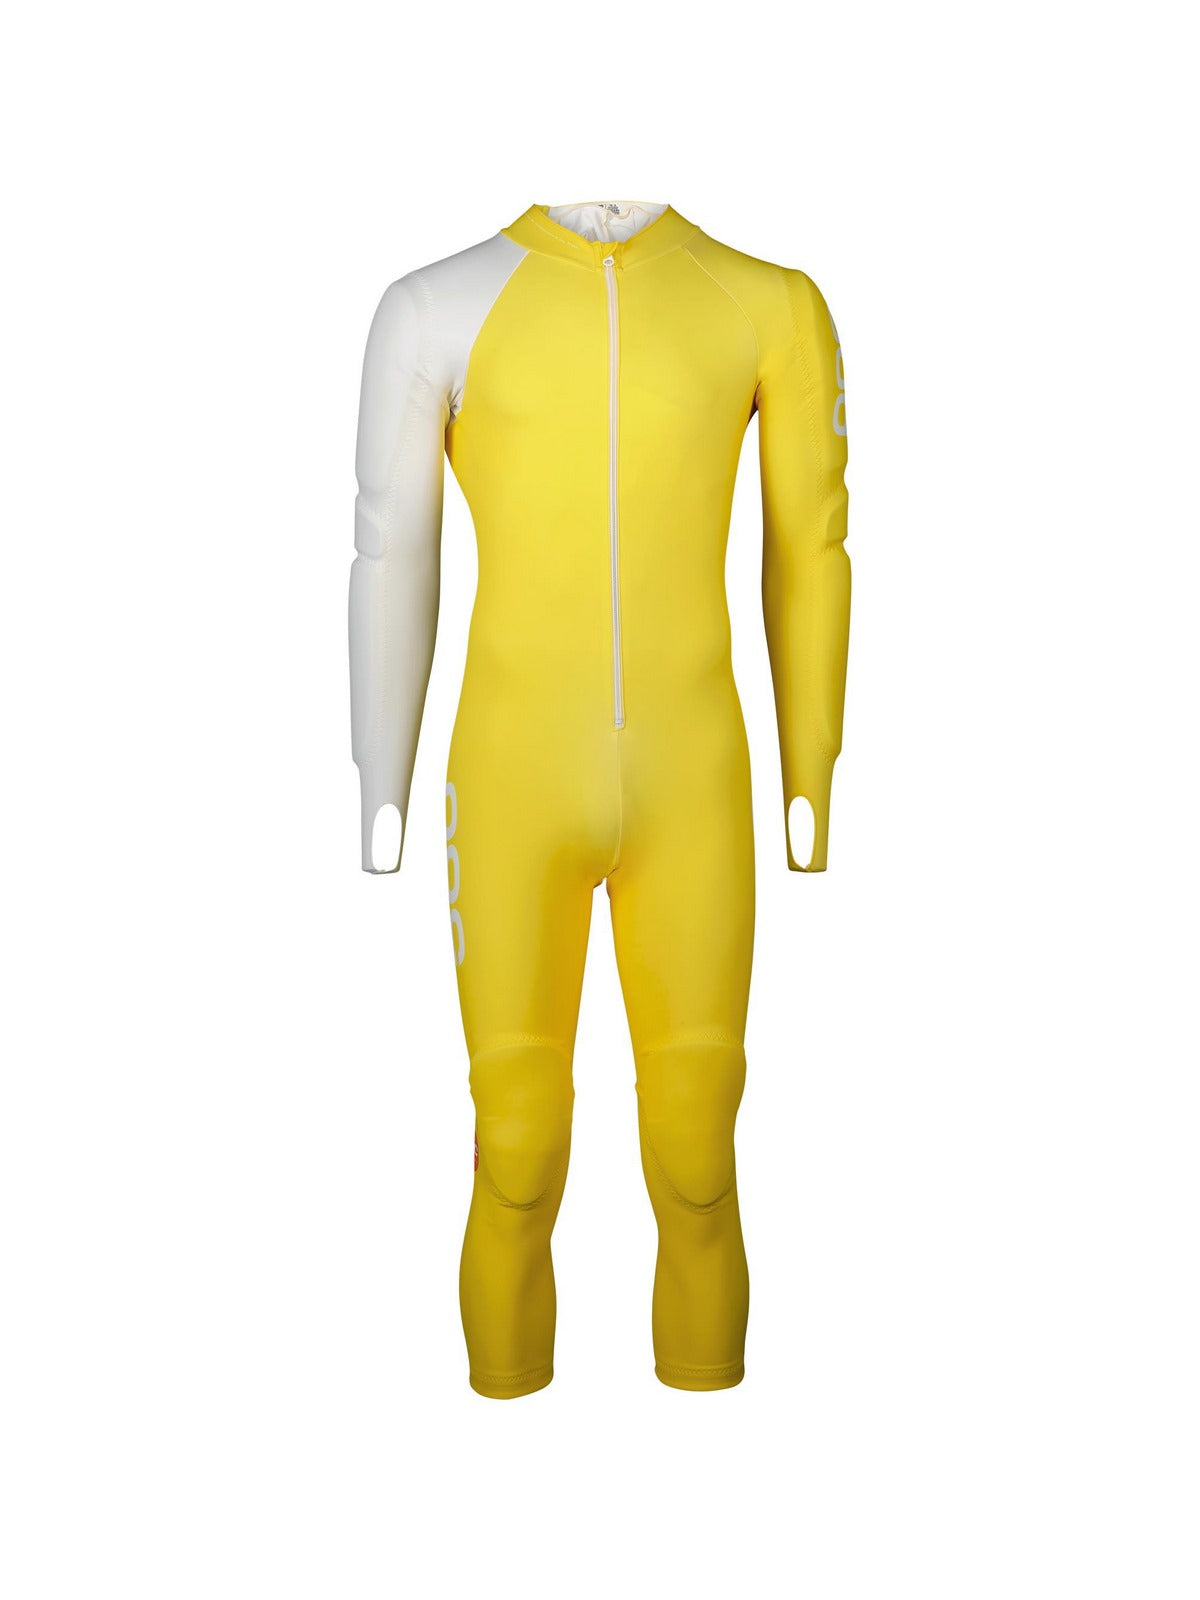 Guma narciarska POC Skin GS - Ave. Yellow/Hyd. White